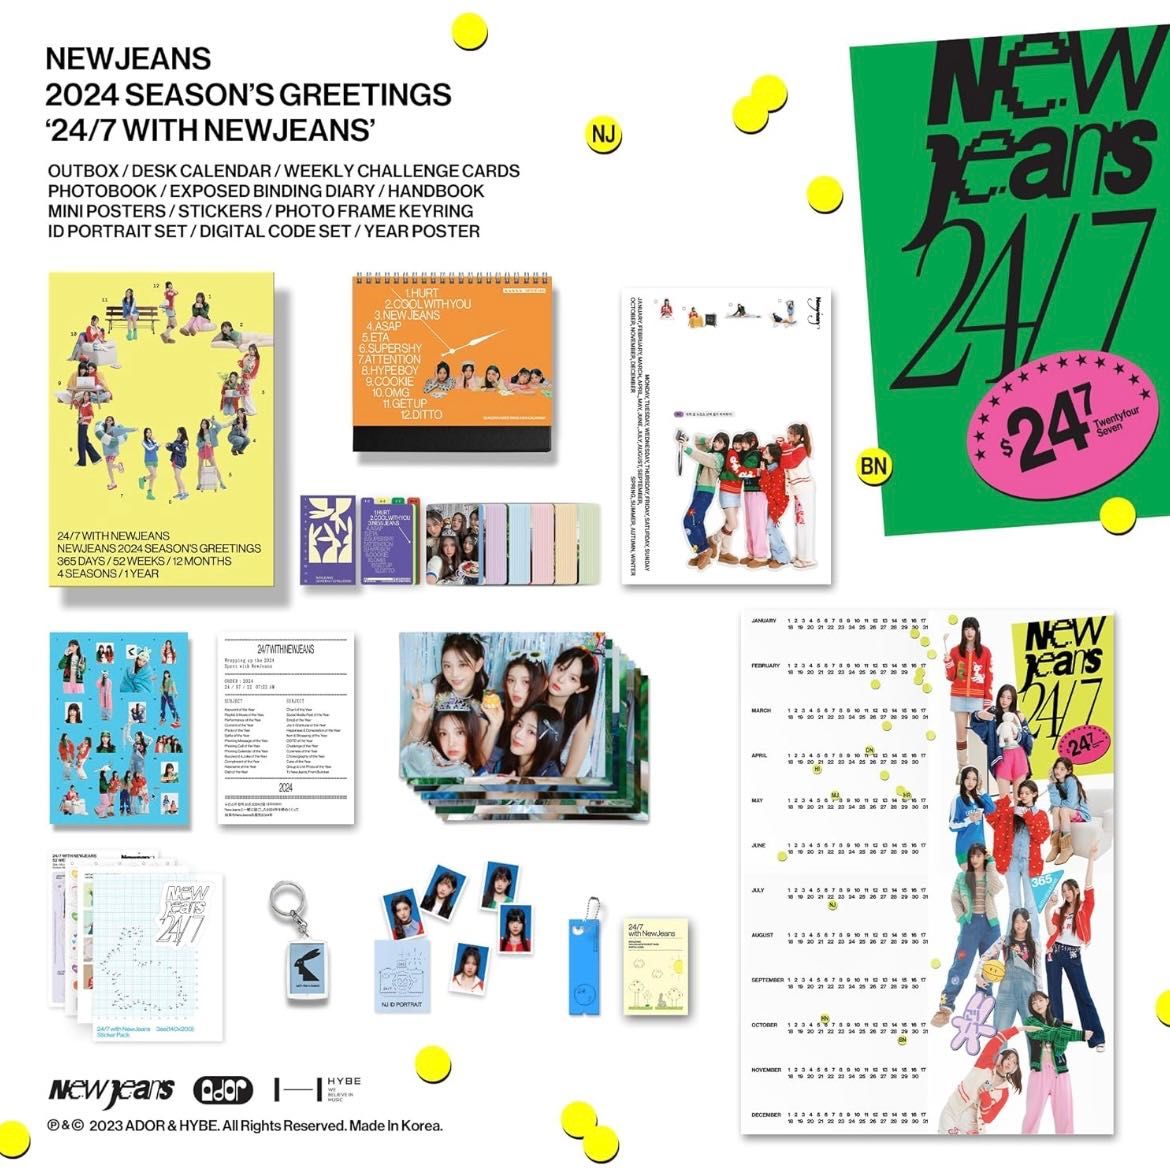 24/7 with NEWJEANS season’s greetings к-поп альбом k-pop